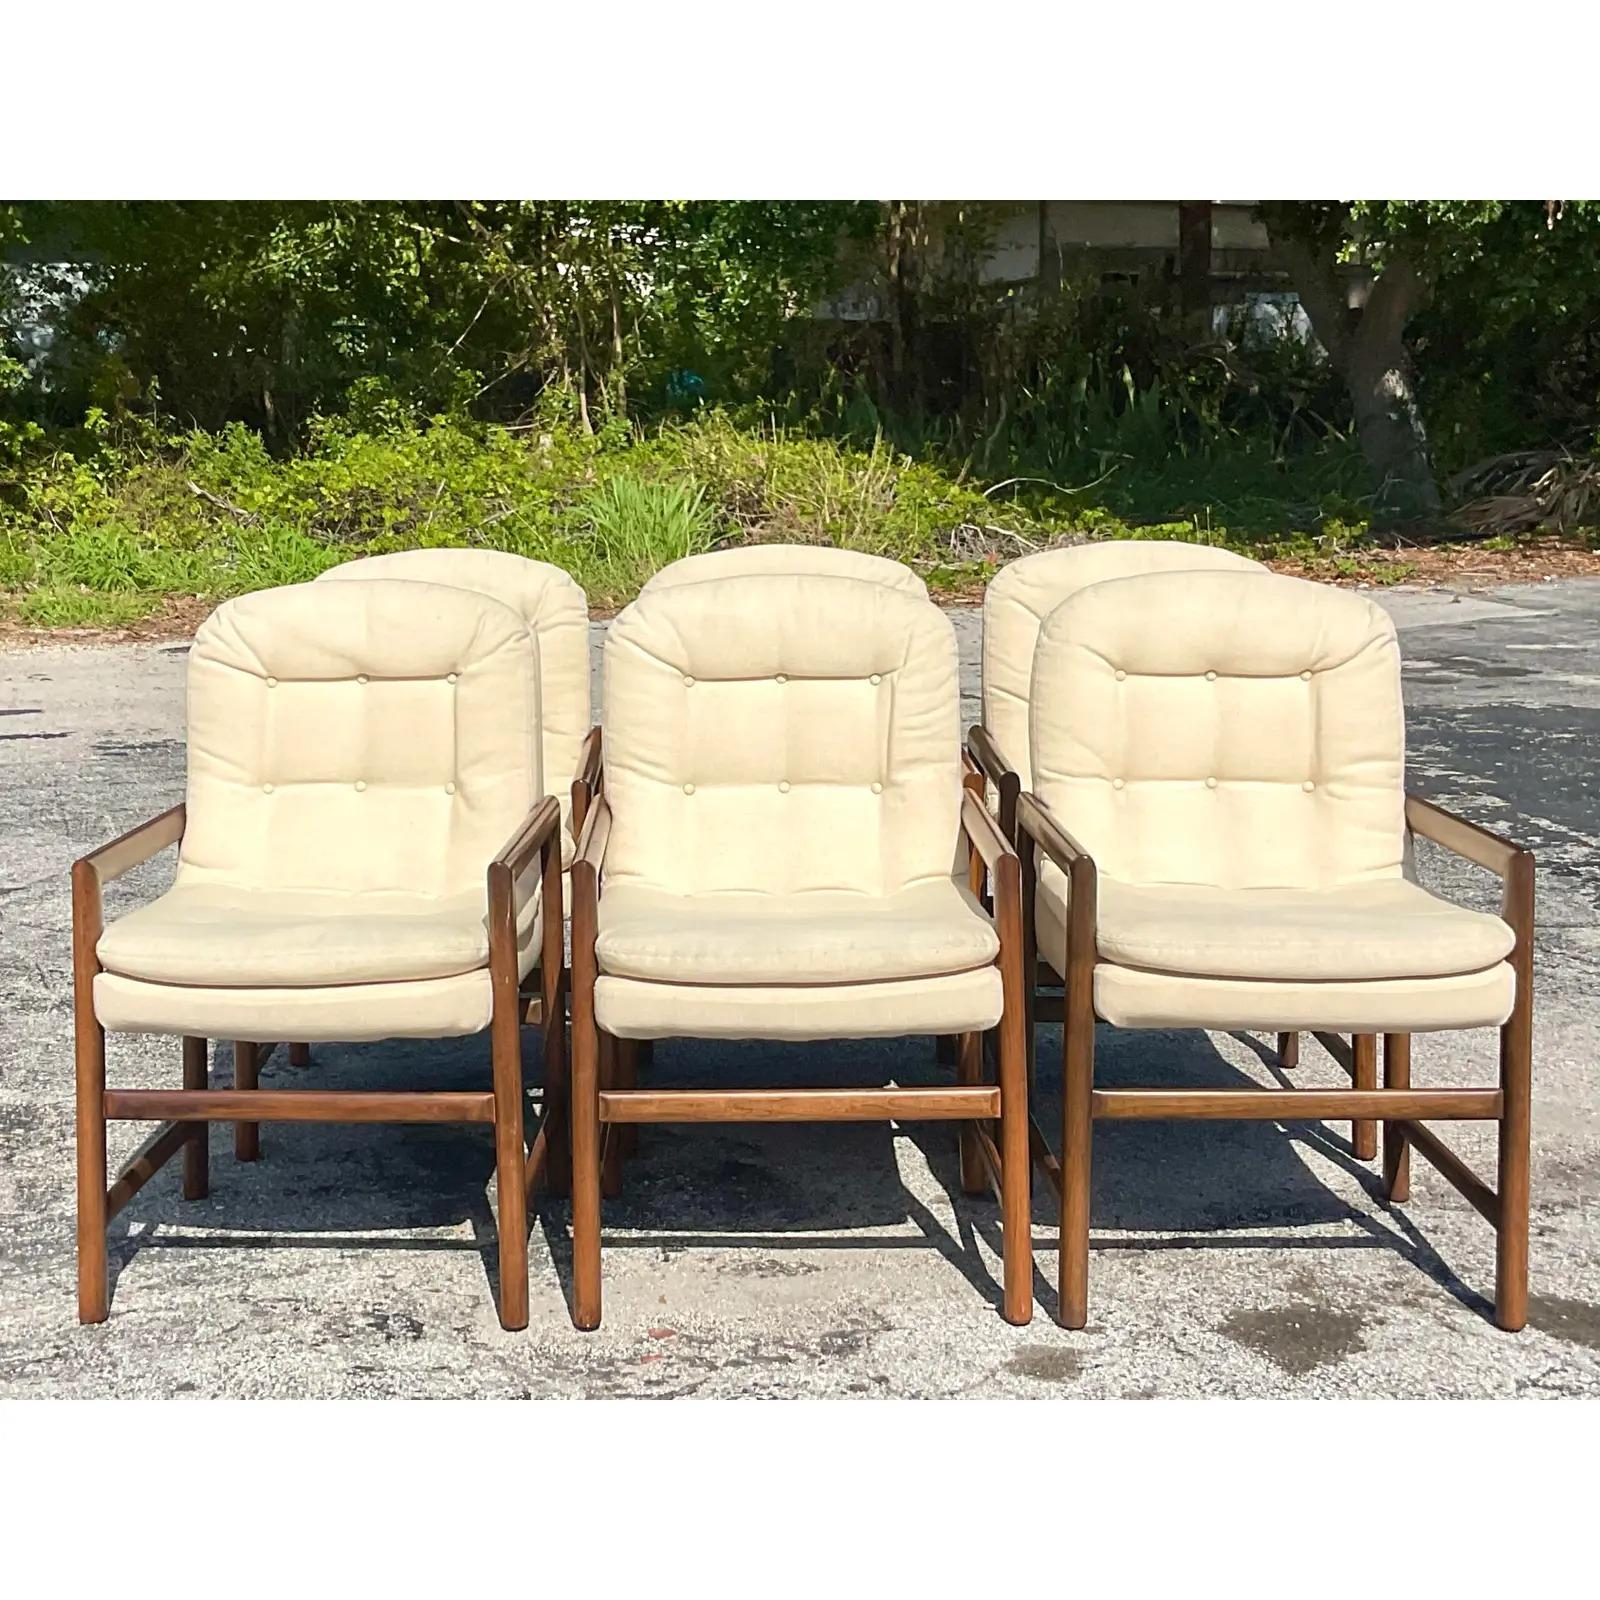 Vintage MCM Wood Frame Dining Chairs - Set of 6 1